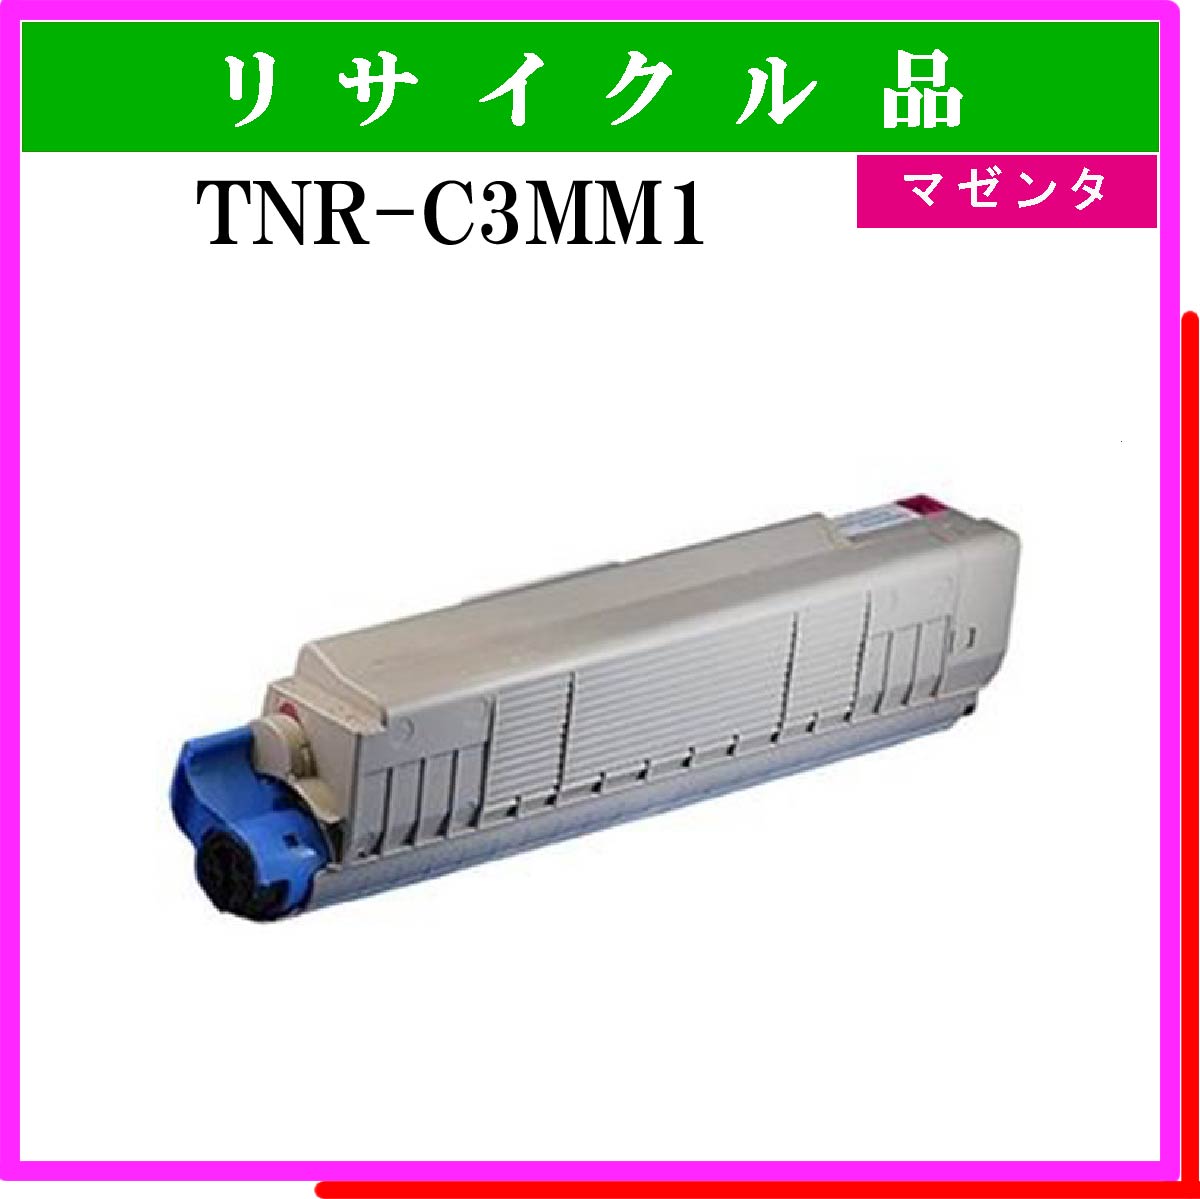 TNR-C3MM1